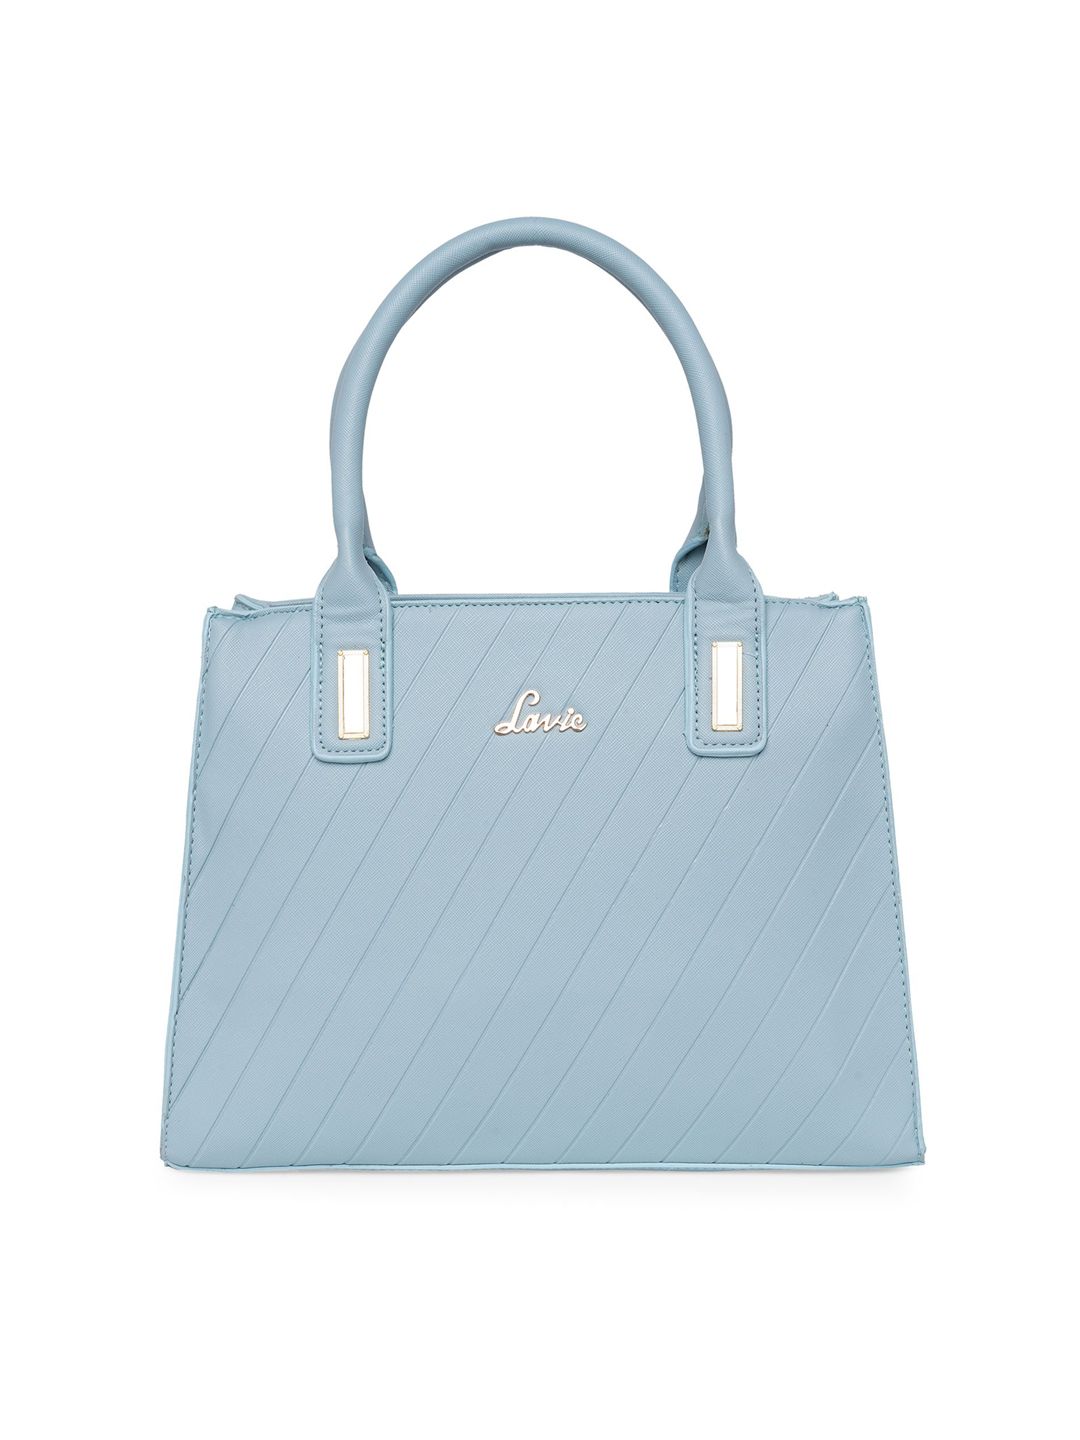 Lavie Blue Structured Handheld Bag Price in India